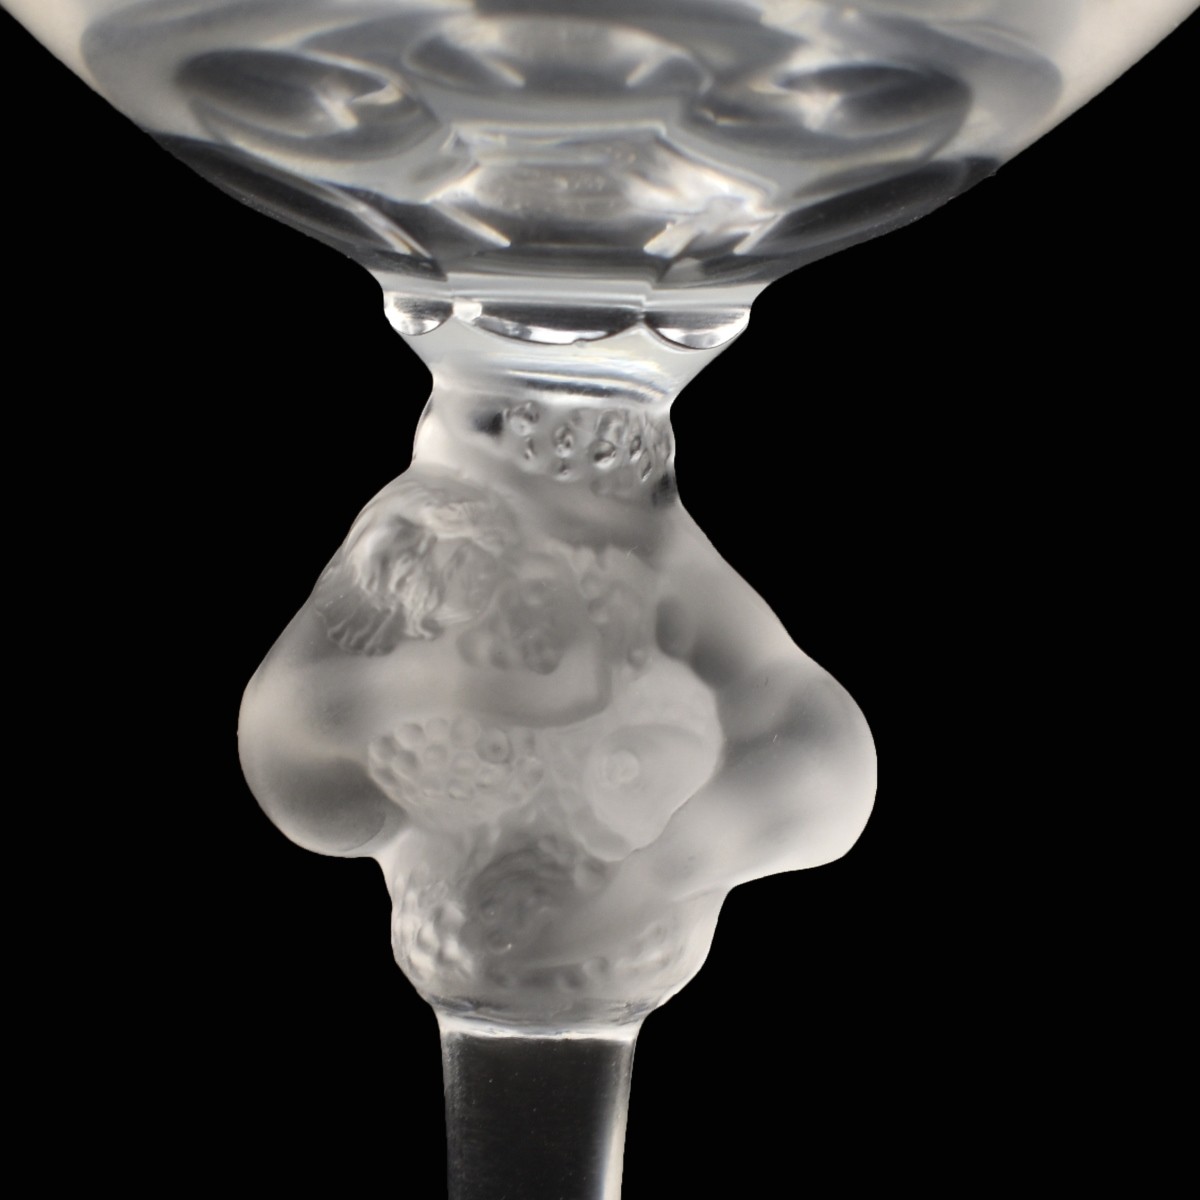 Four (4) Lalique "Roxanne" Crystal Wine Goblets